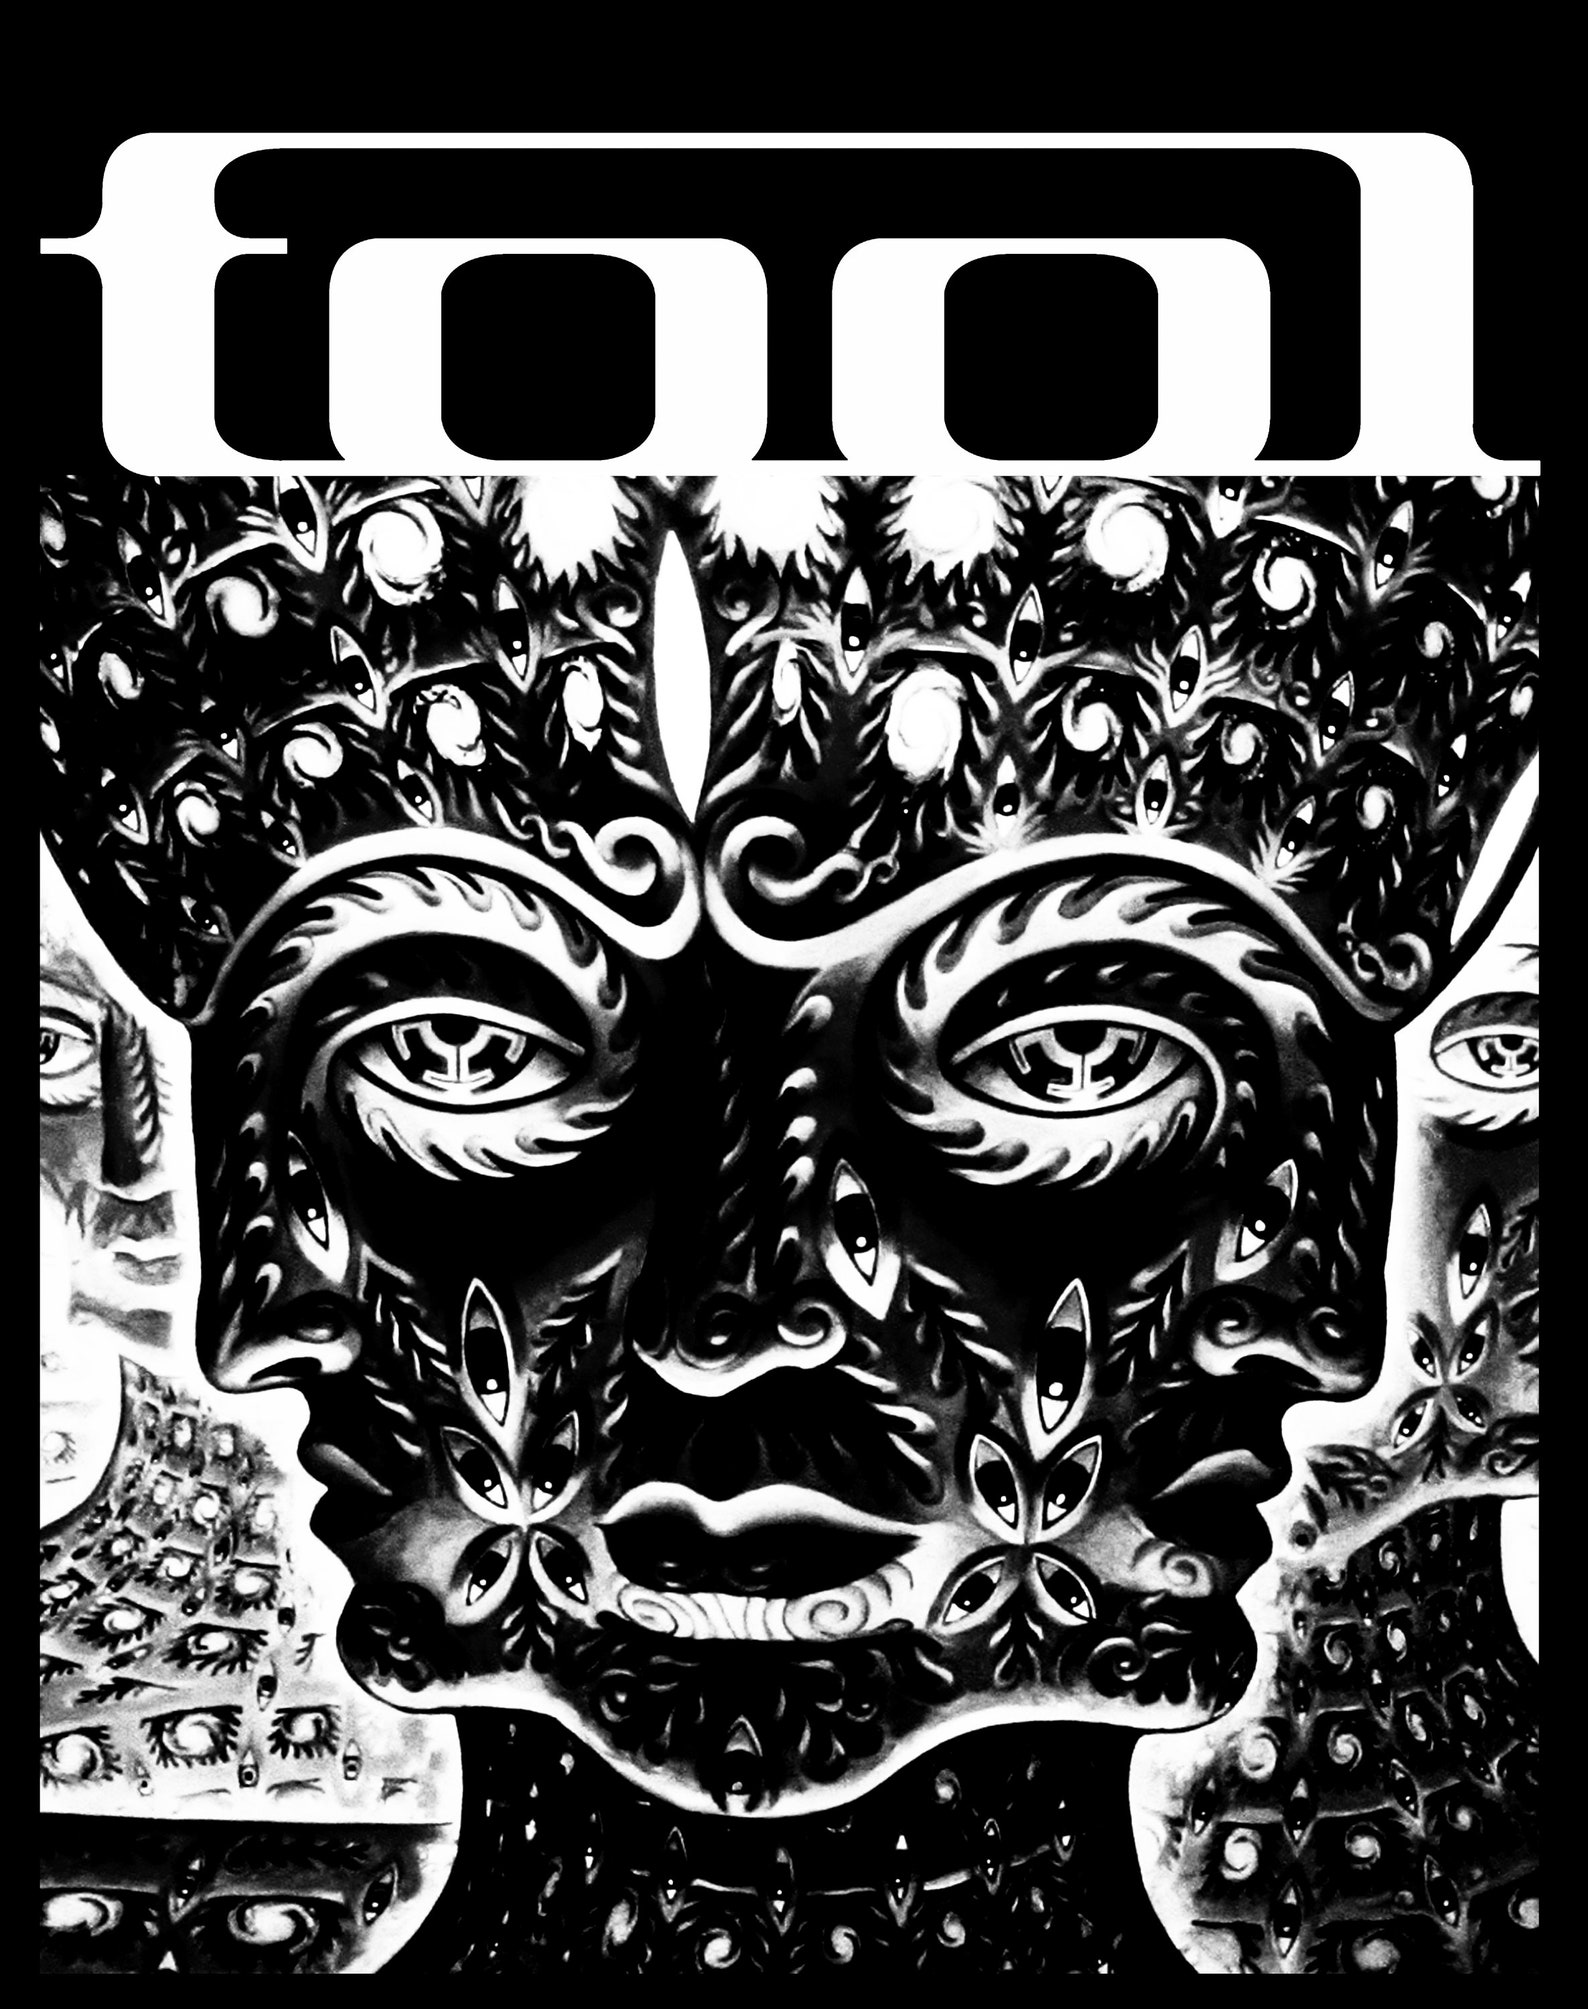 Tool art. Tool обложки. Tool 10000. Tool альбомы. Группа Tool 10000 Days.